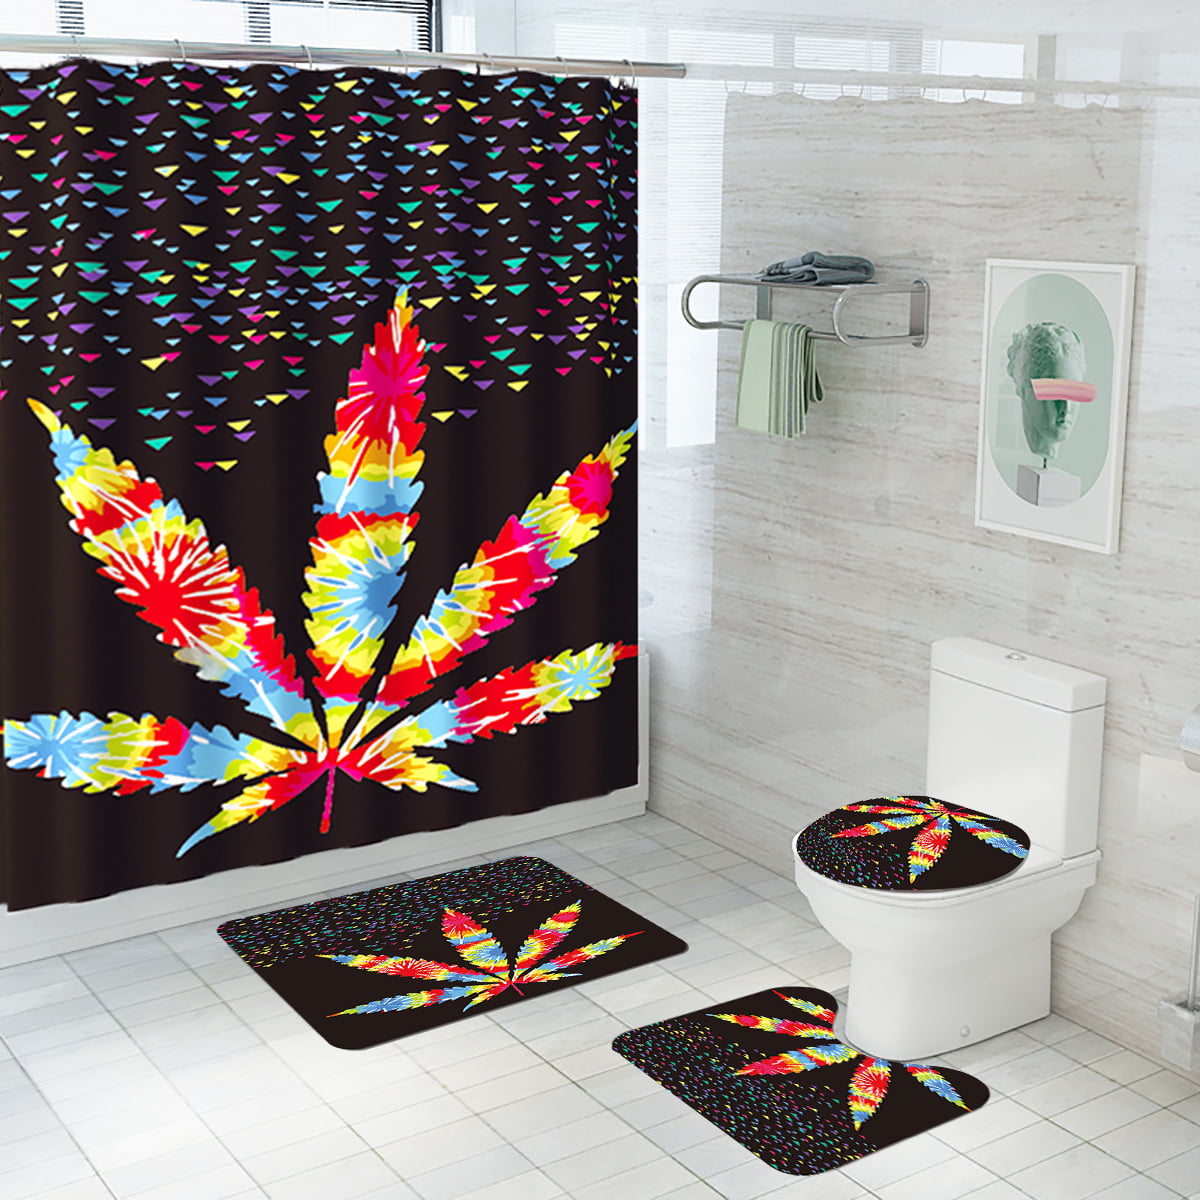 Details about   Plaid Shower Curtain Fabric Bathroom Decor Set with Hooks 4 Sizes 